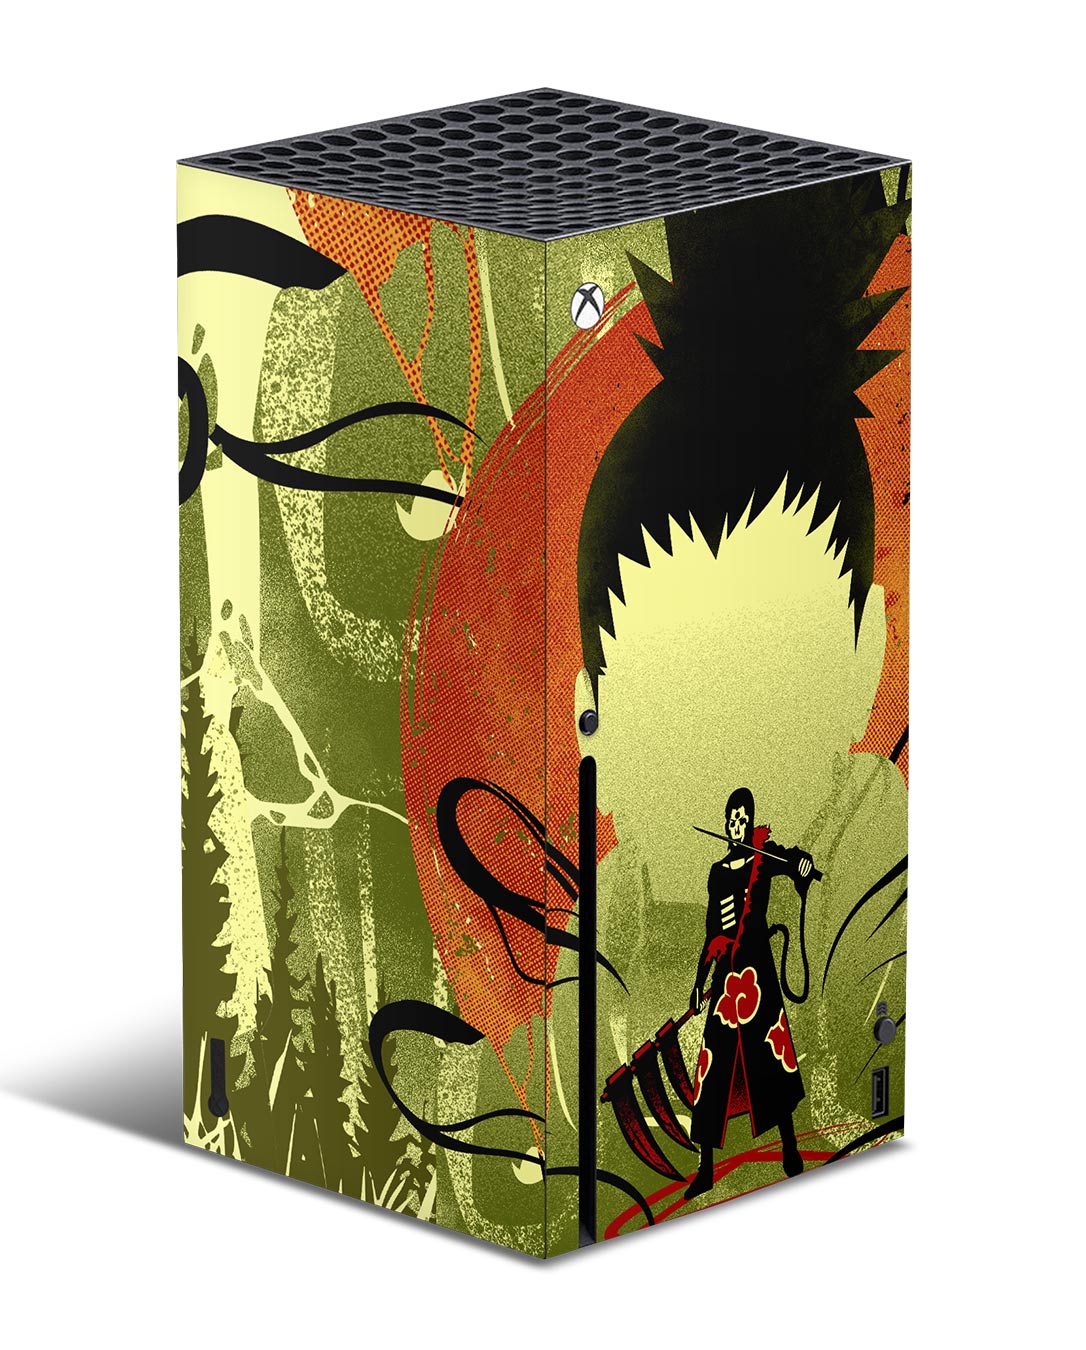 Itachi - Xbox Series X Vinyl Console Skin Wrap Inspired by Naruto